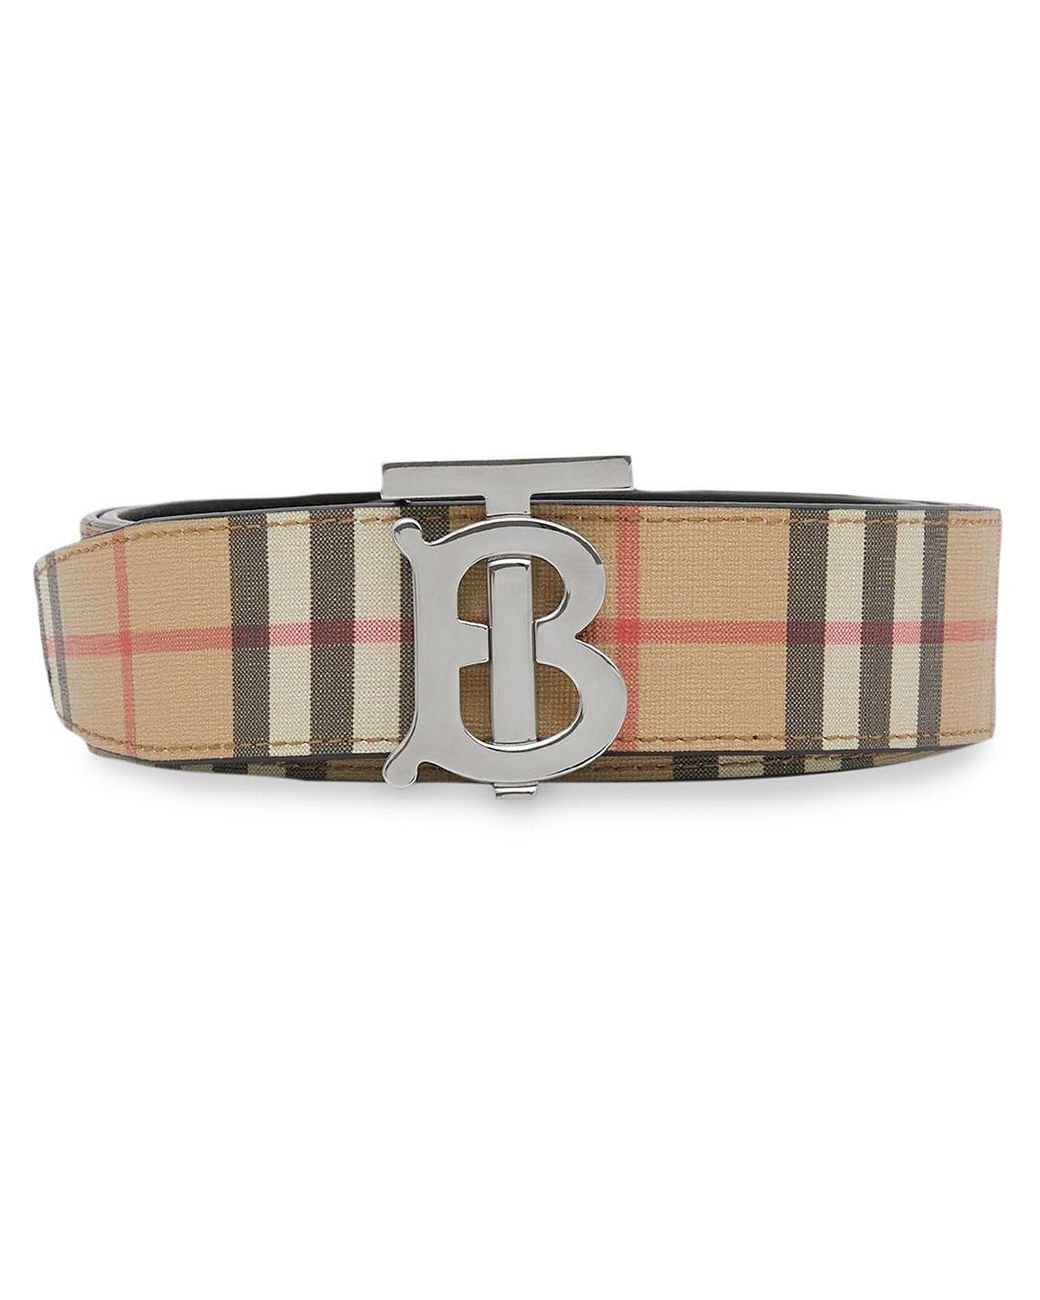 Burberry Canvas Belts Beige for Men - Save 45% - Lyst